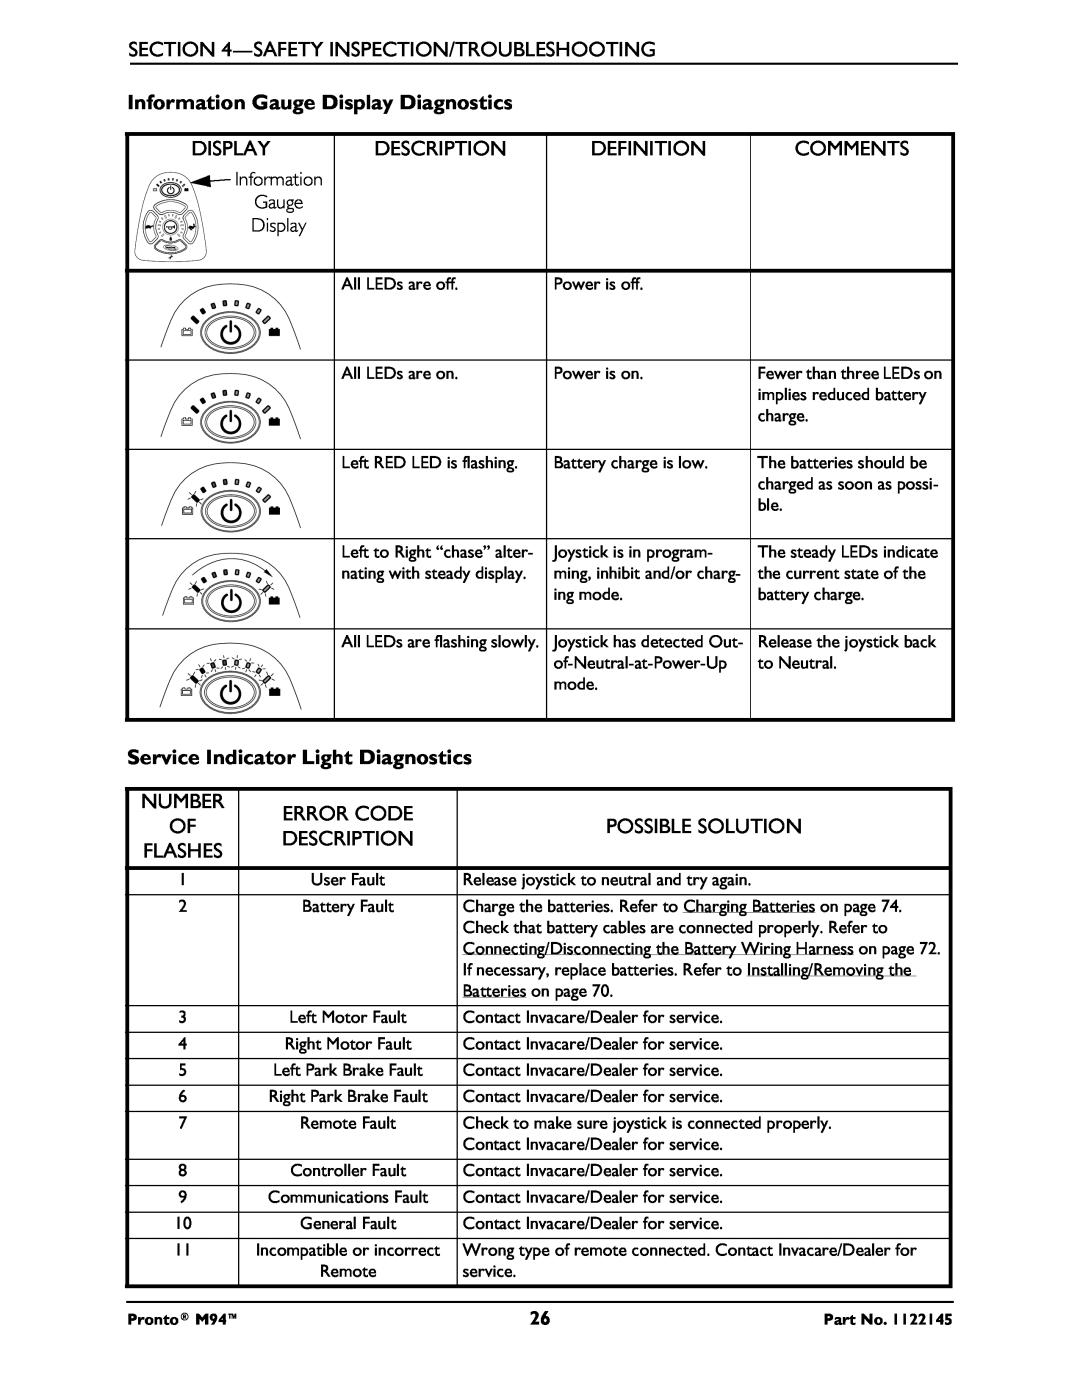 Invacare Pronto M71 manual Comments, Information Gauge Display, Description 